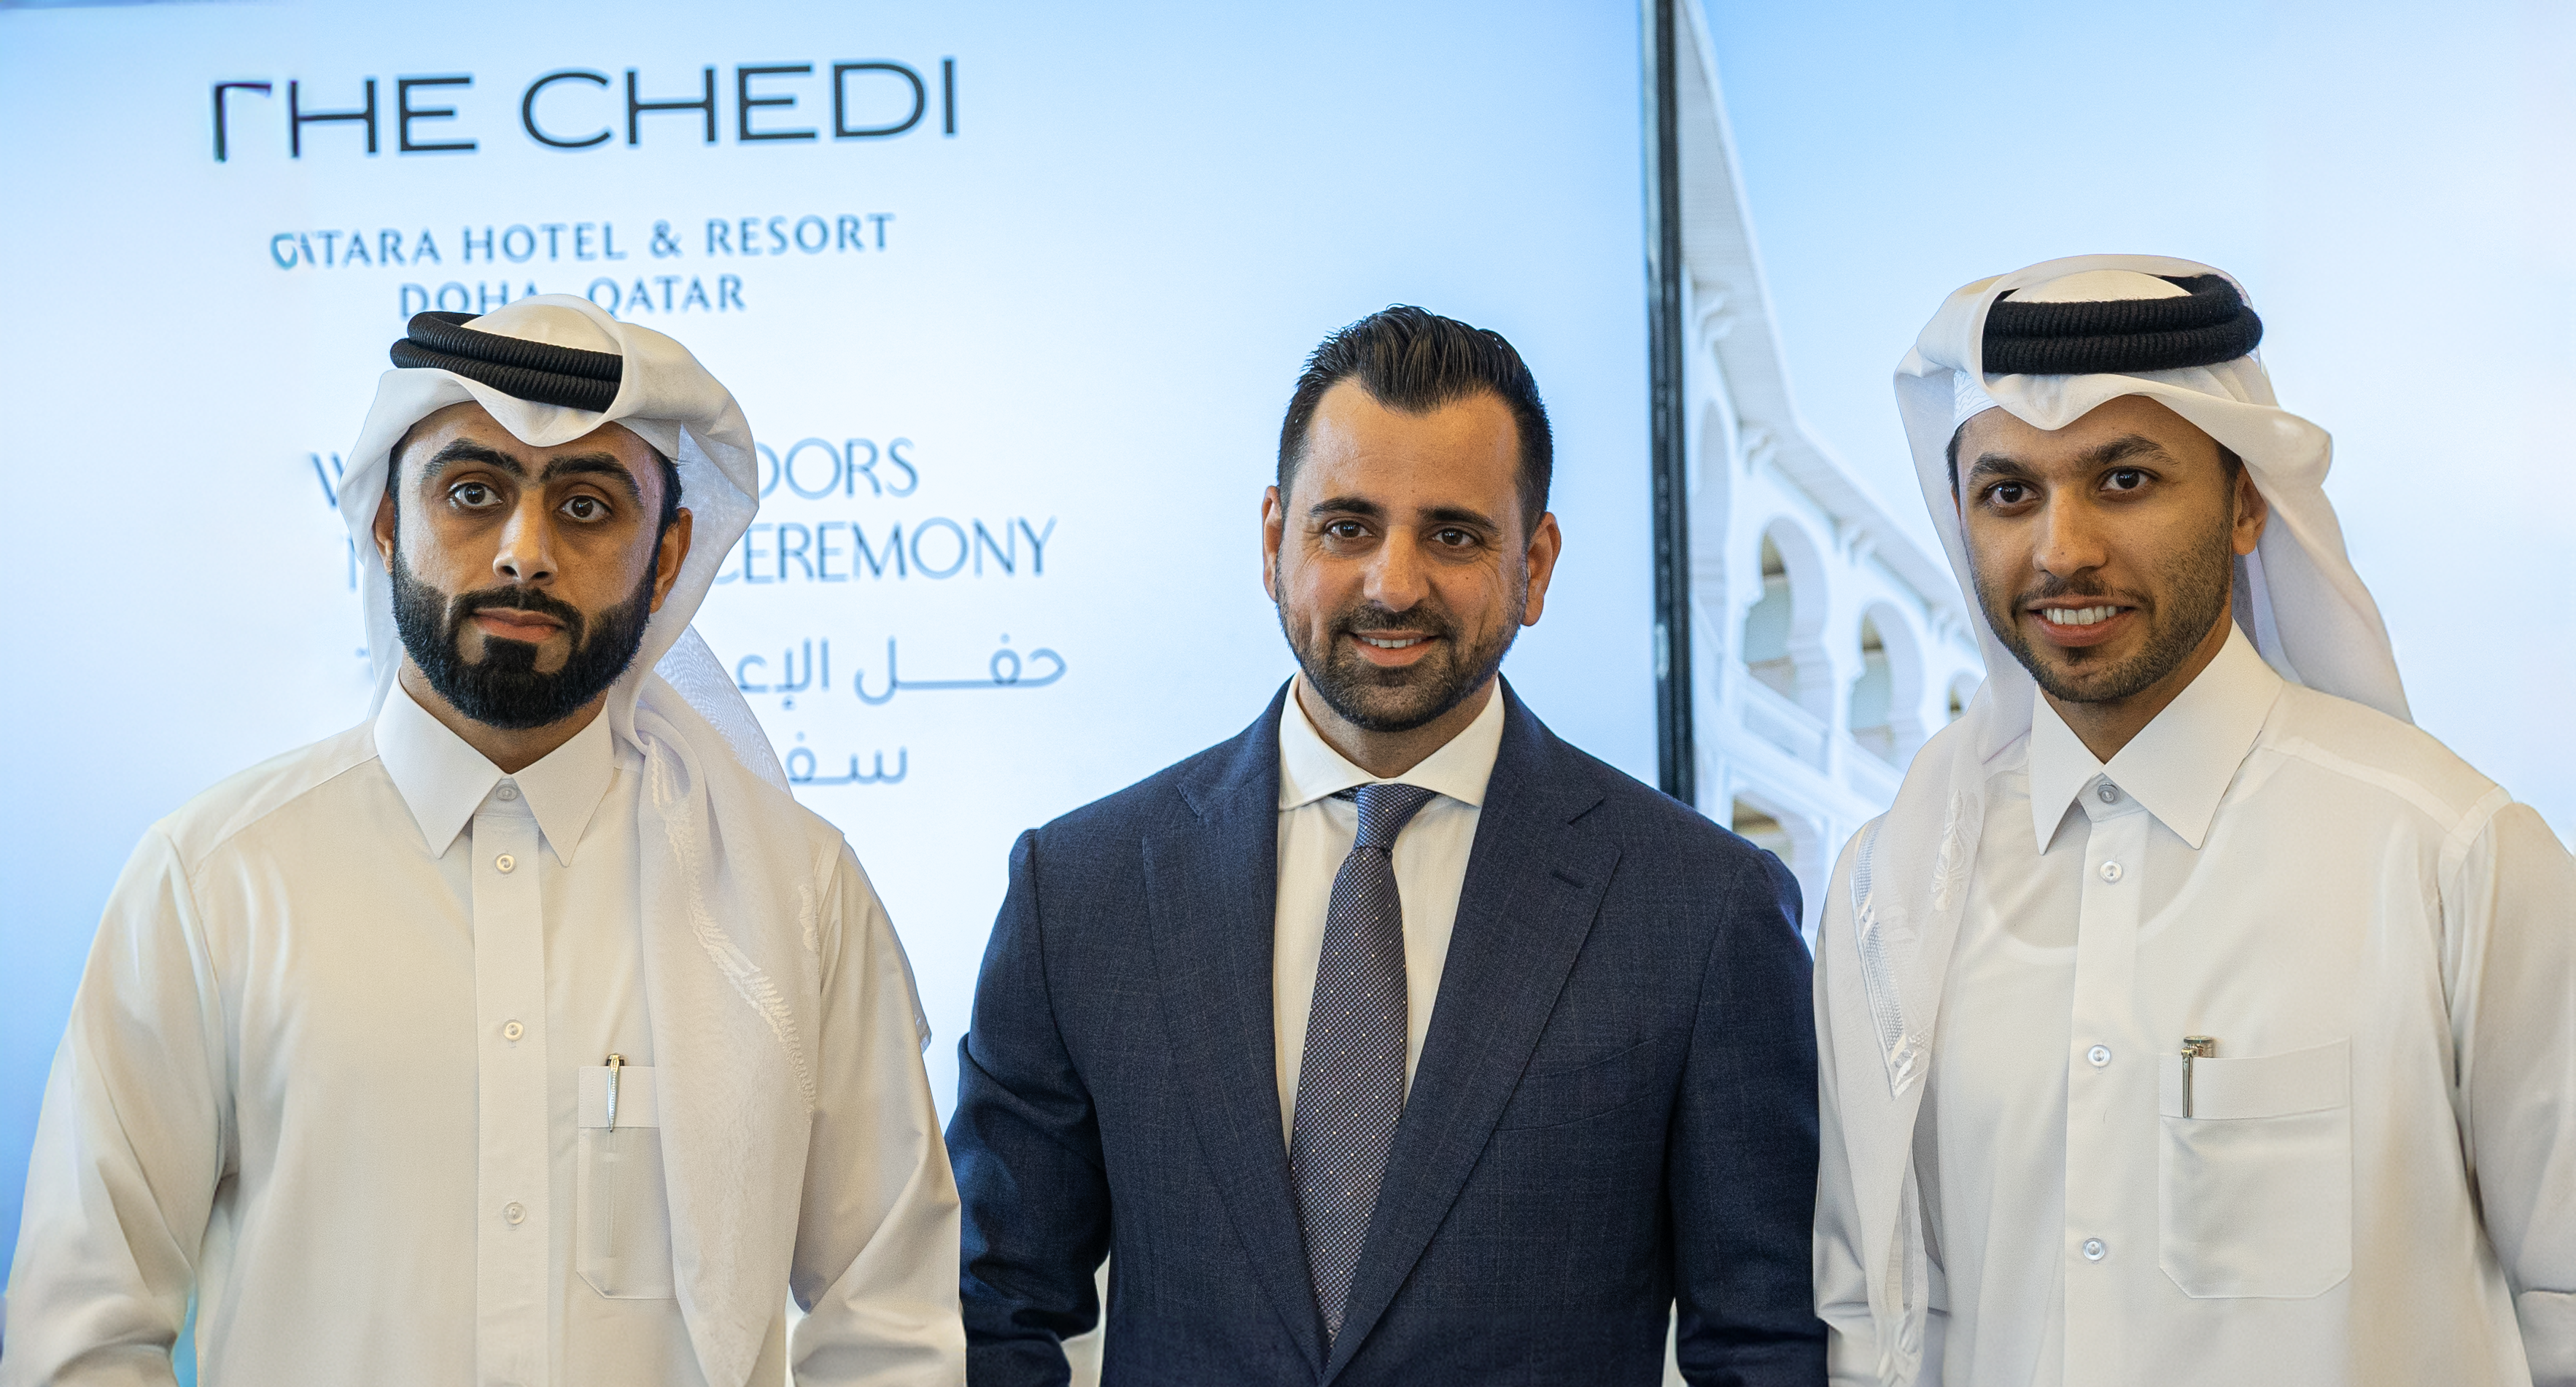 The Chedi Katara Hotel & Resort announces new ambassadors